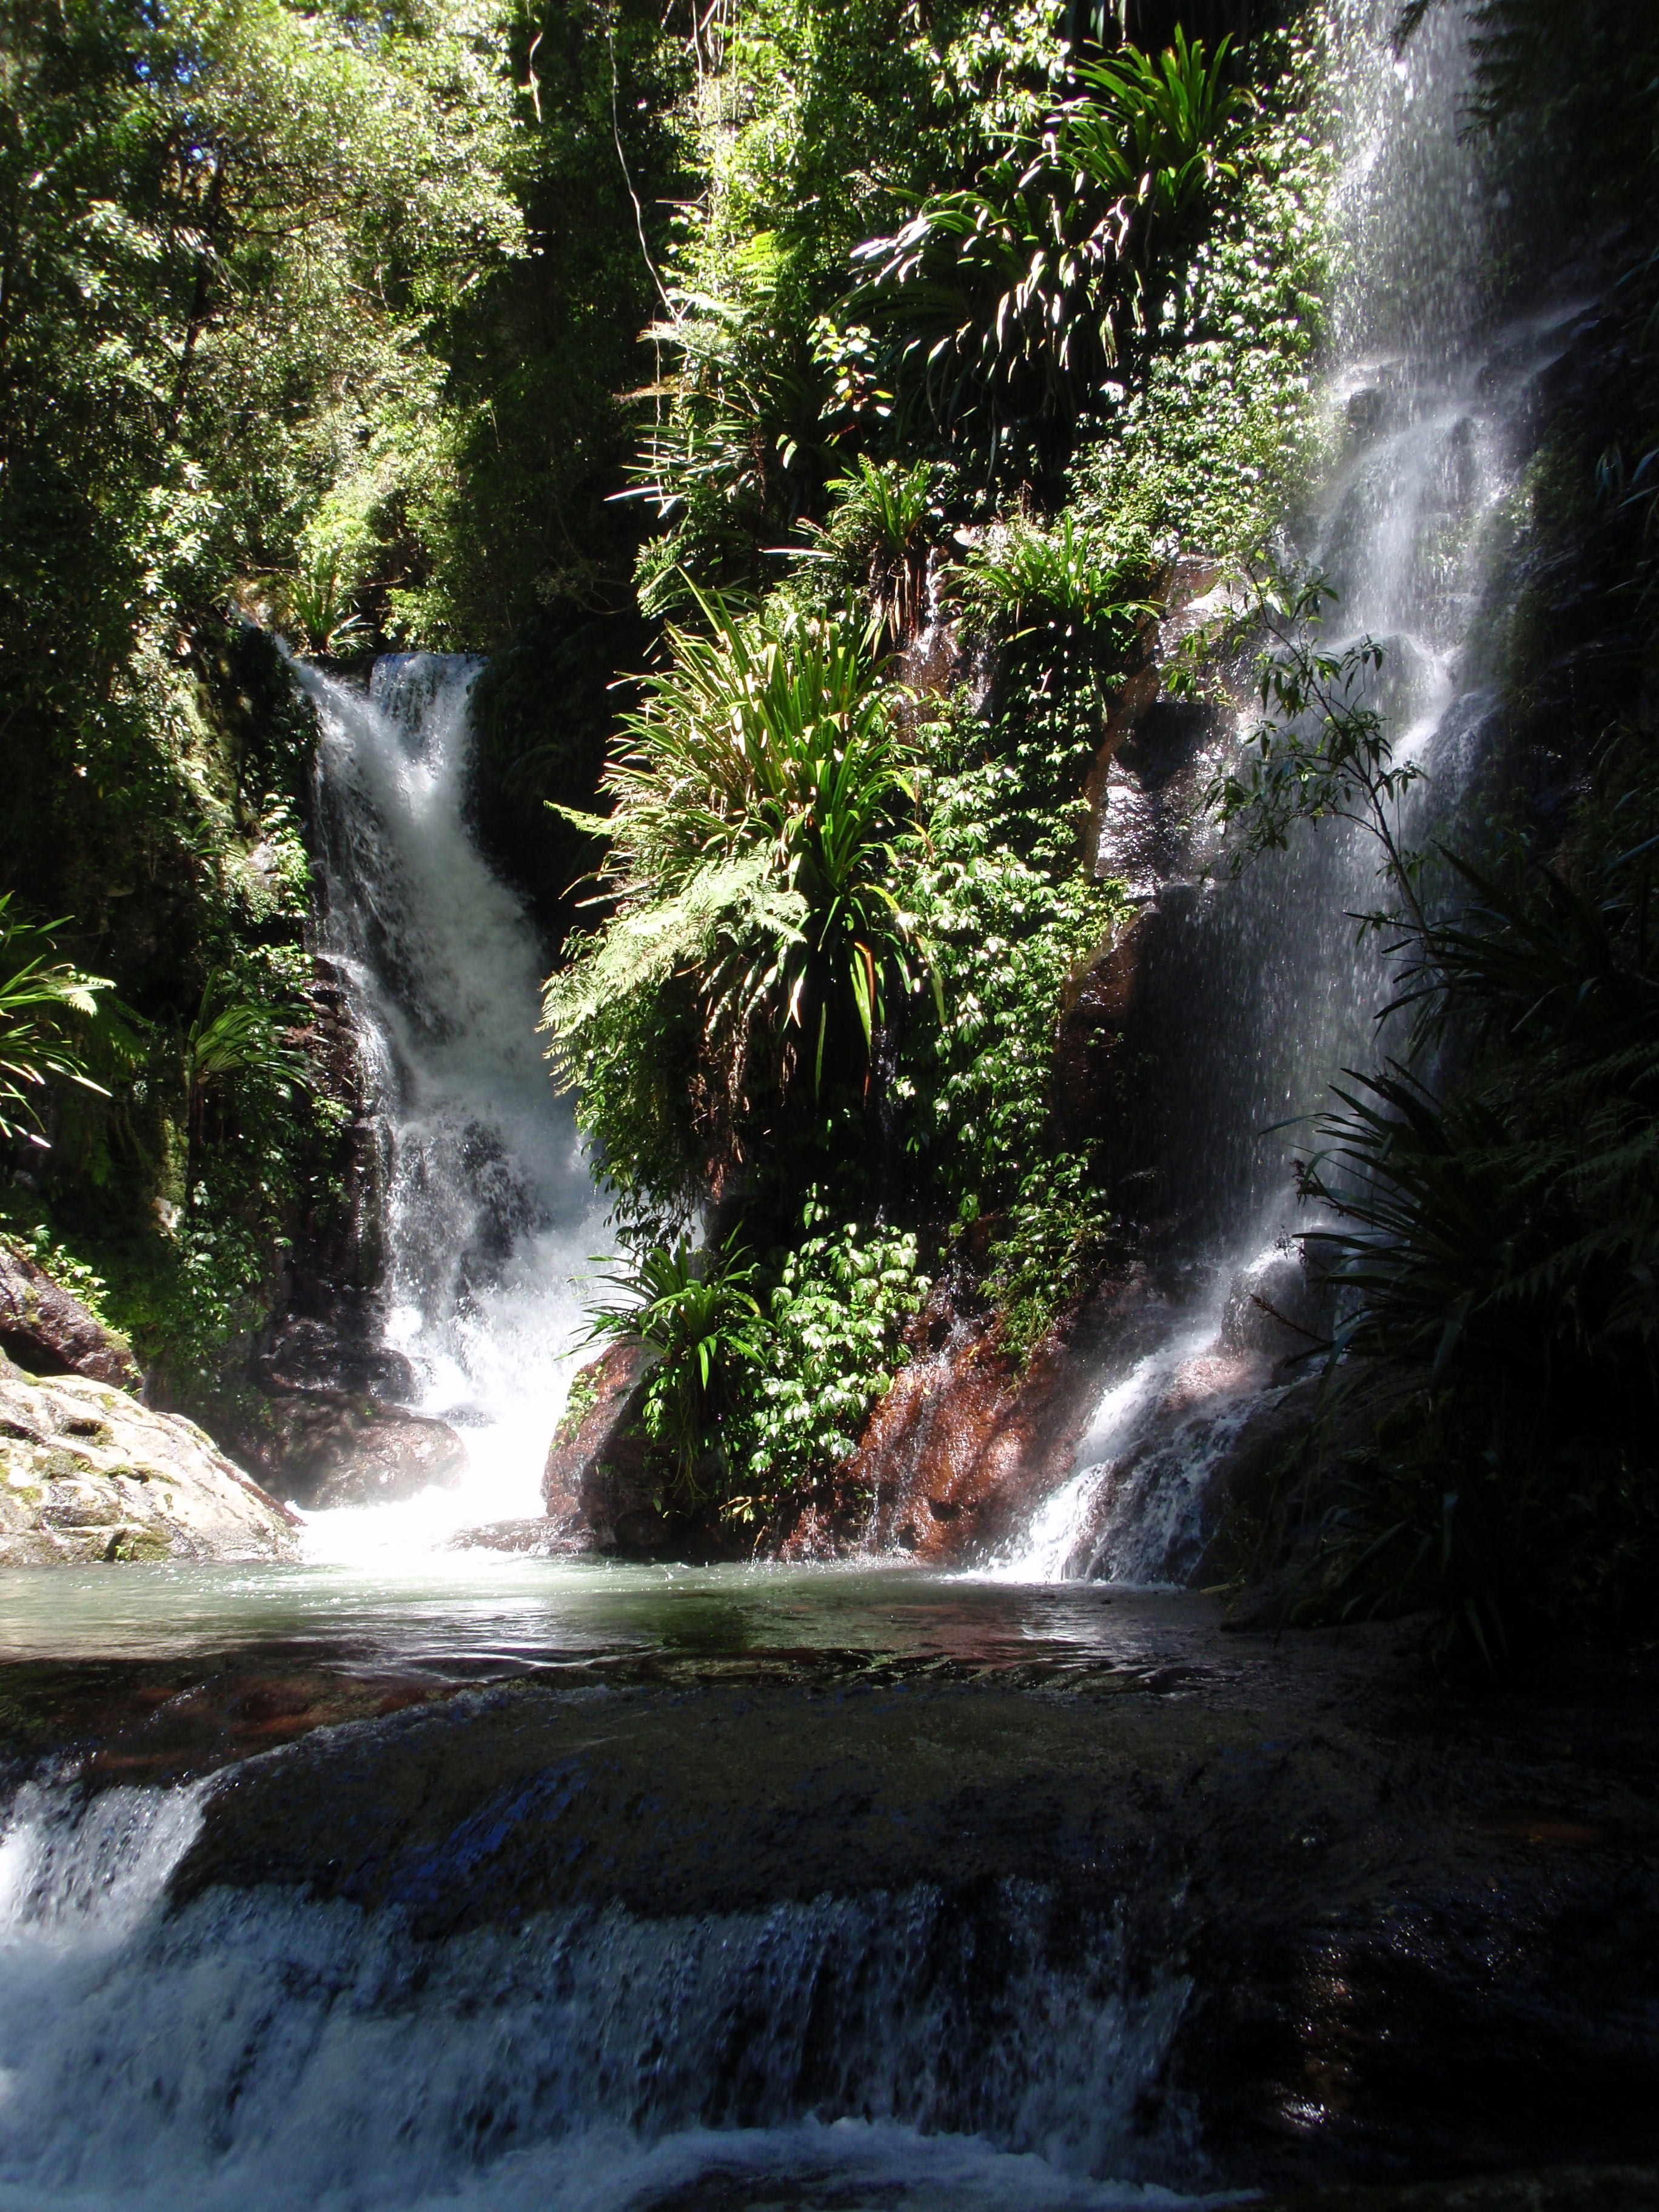 Elabana Falls in Lamington National Park, part of Gondwana Rainforests World Heritage Area.